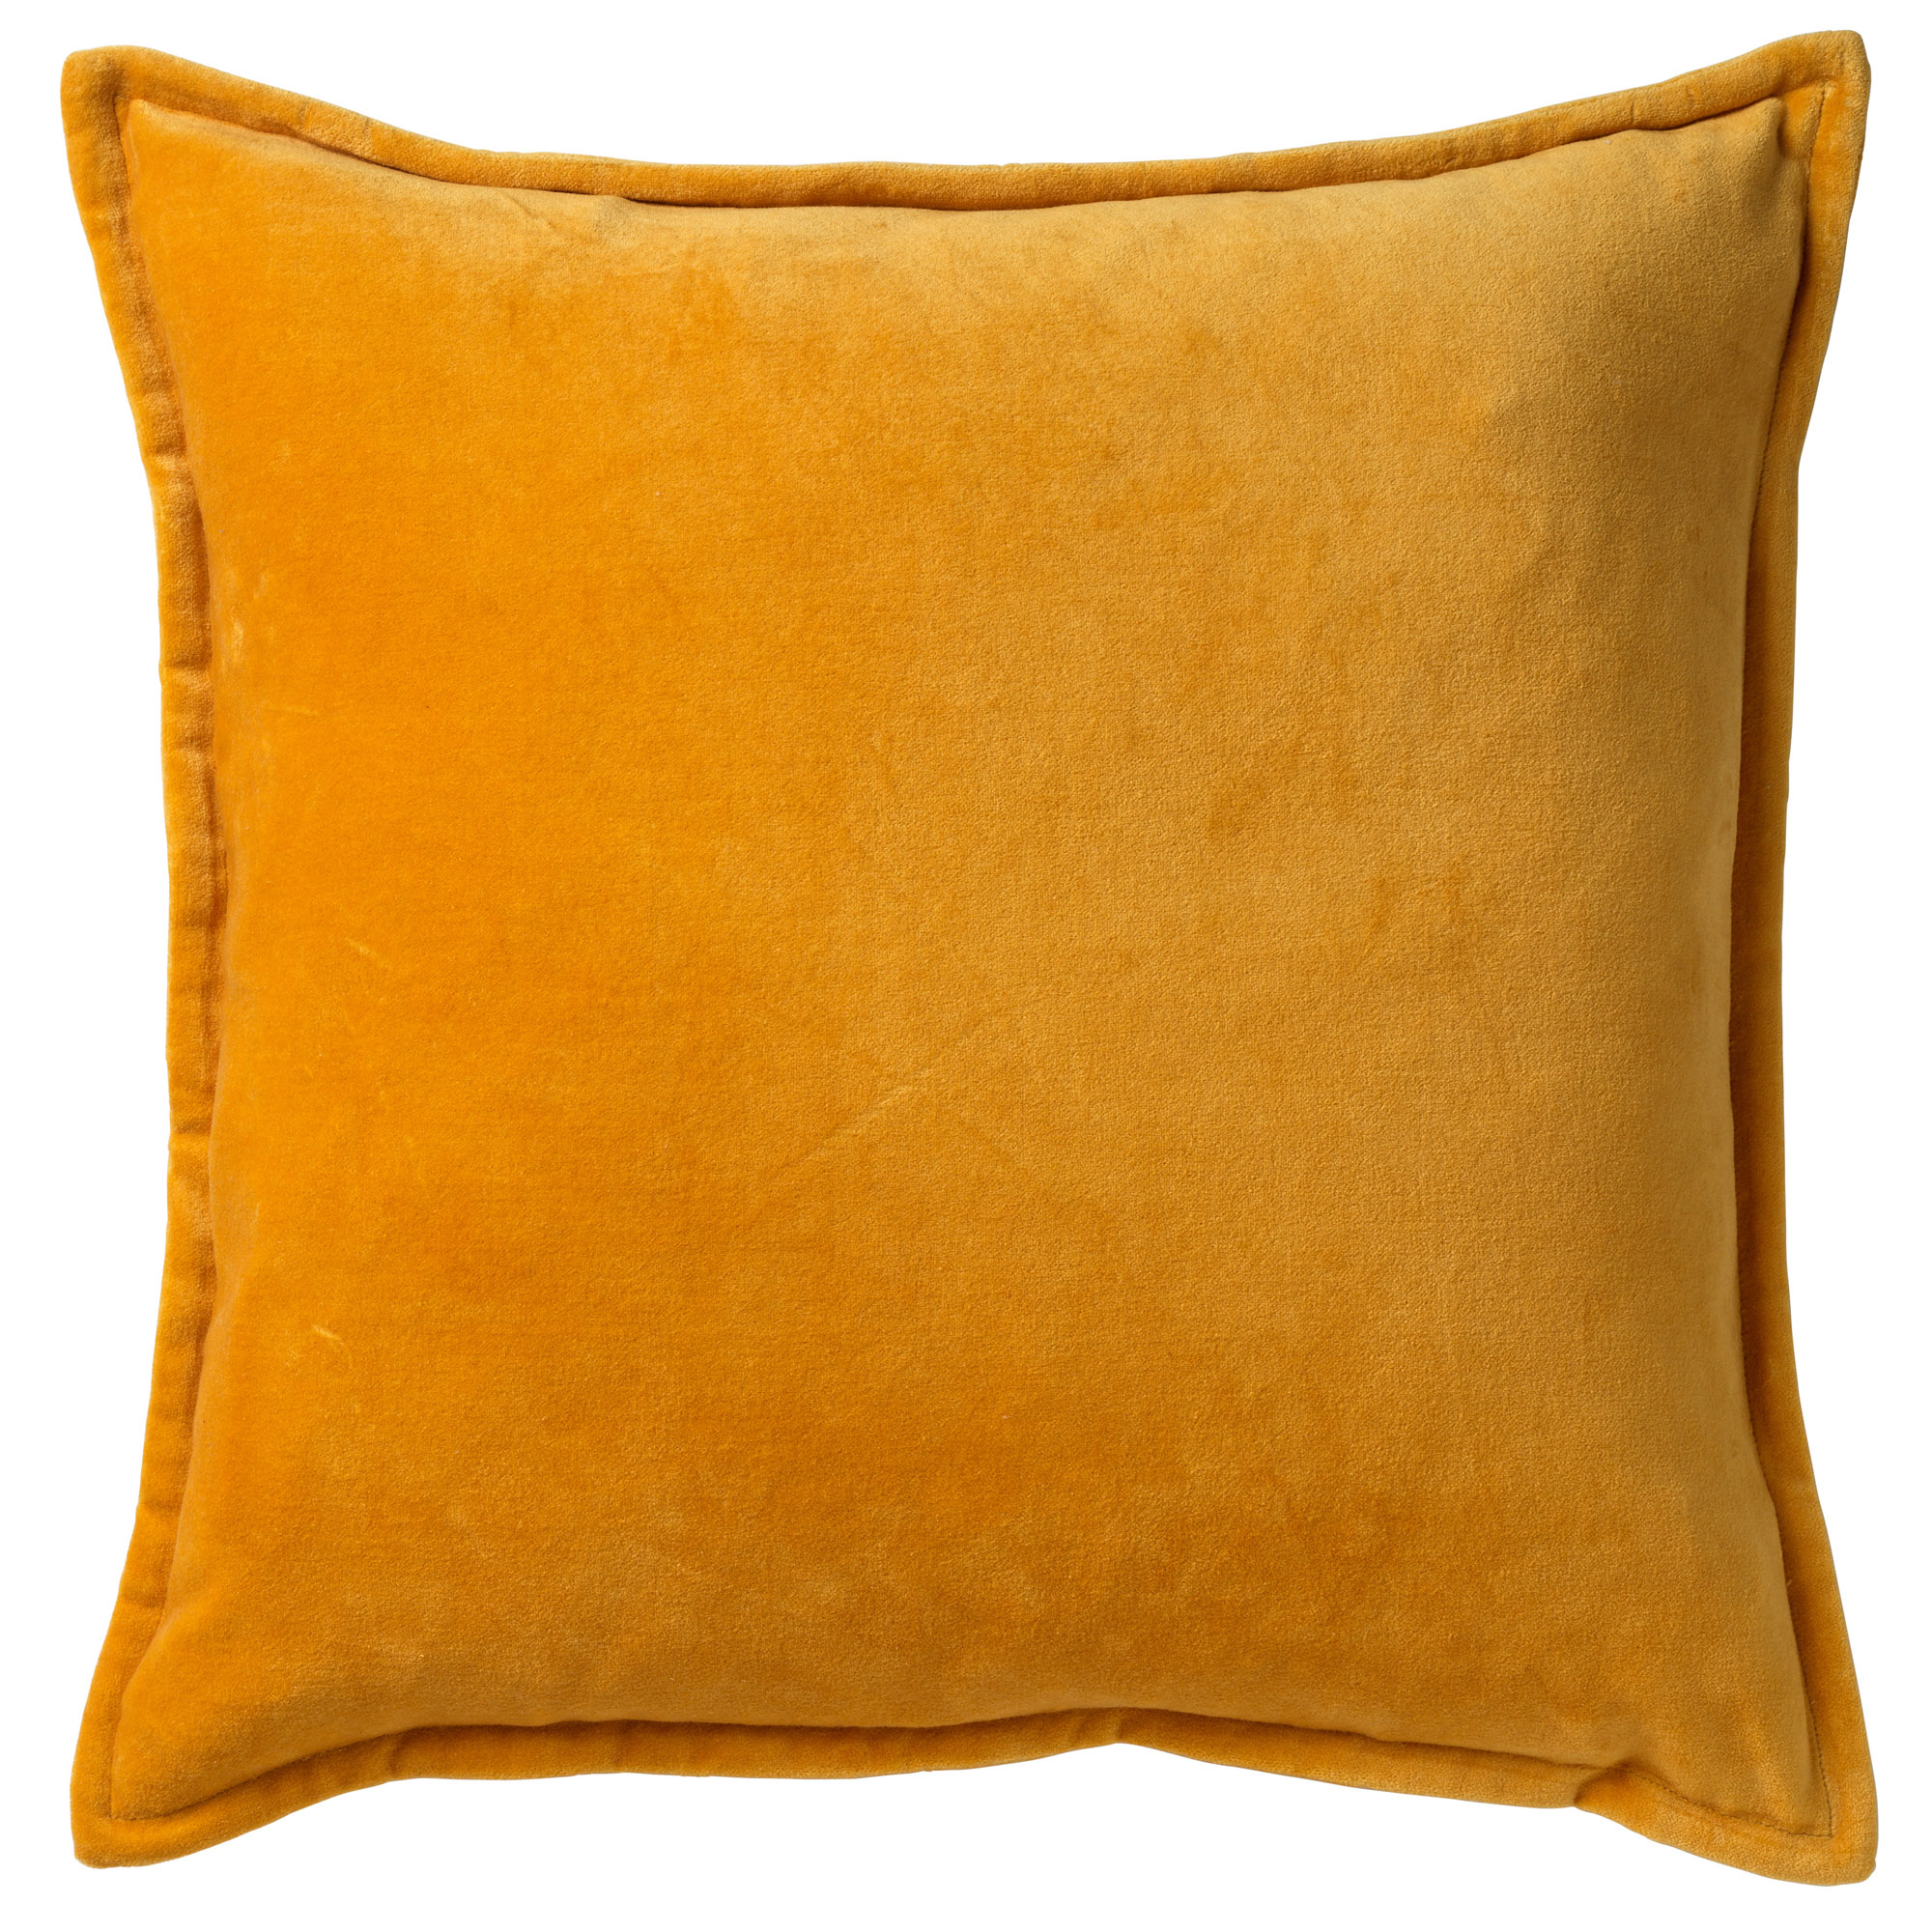 CAITH - Kussenhoes 50x50 cm - 100% katoen velvet - lekker zacht - Golden Glow - geel